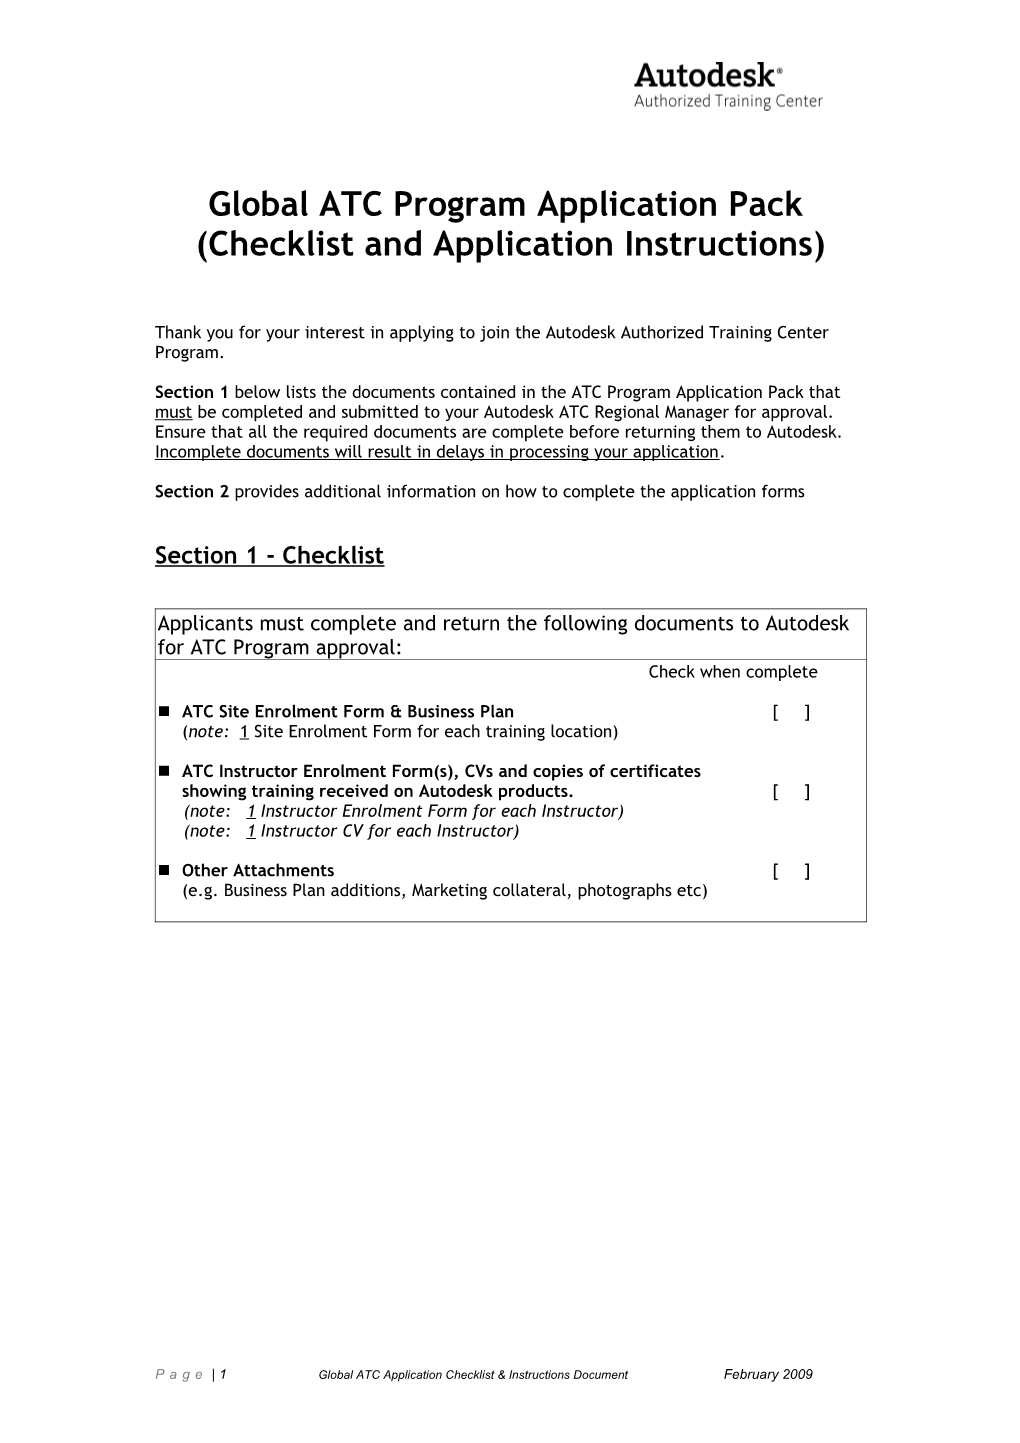 Checklist and ATC Program Enrolment Guide